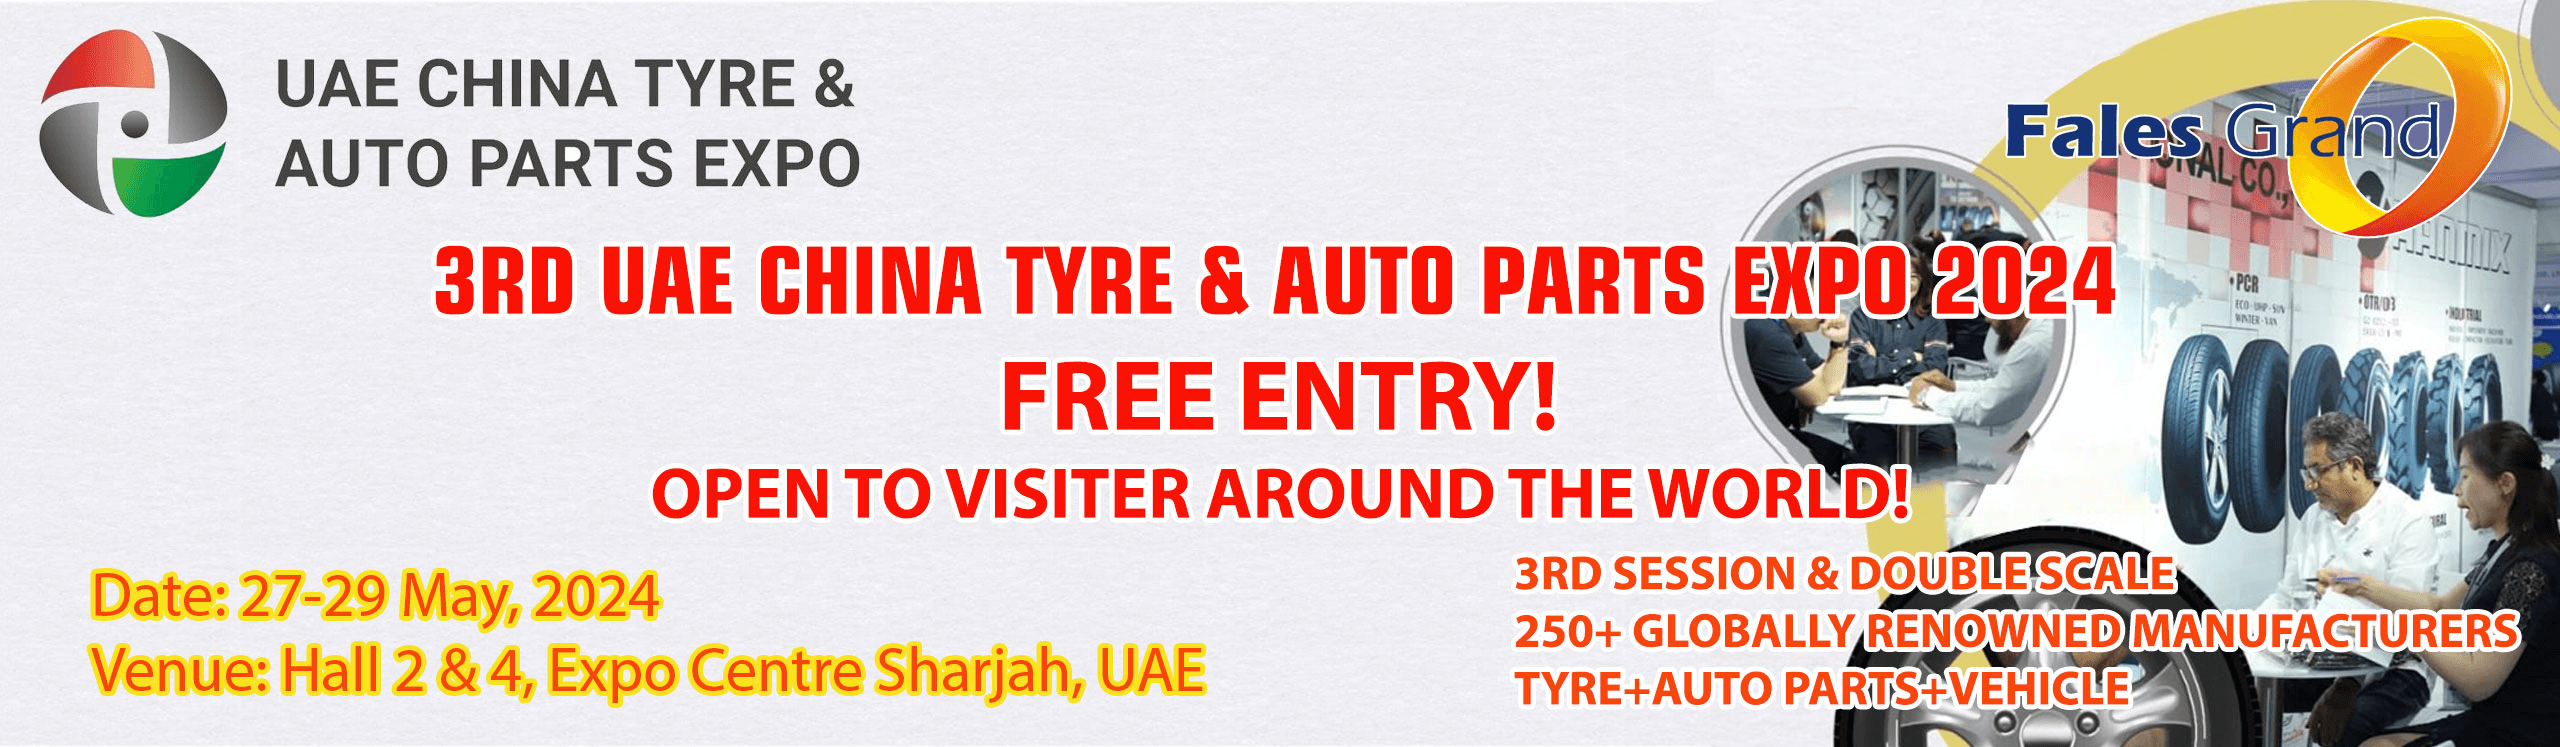 UAE China Tyre & Auto Parts Expo 2024